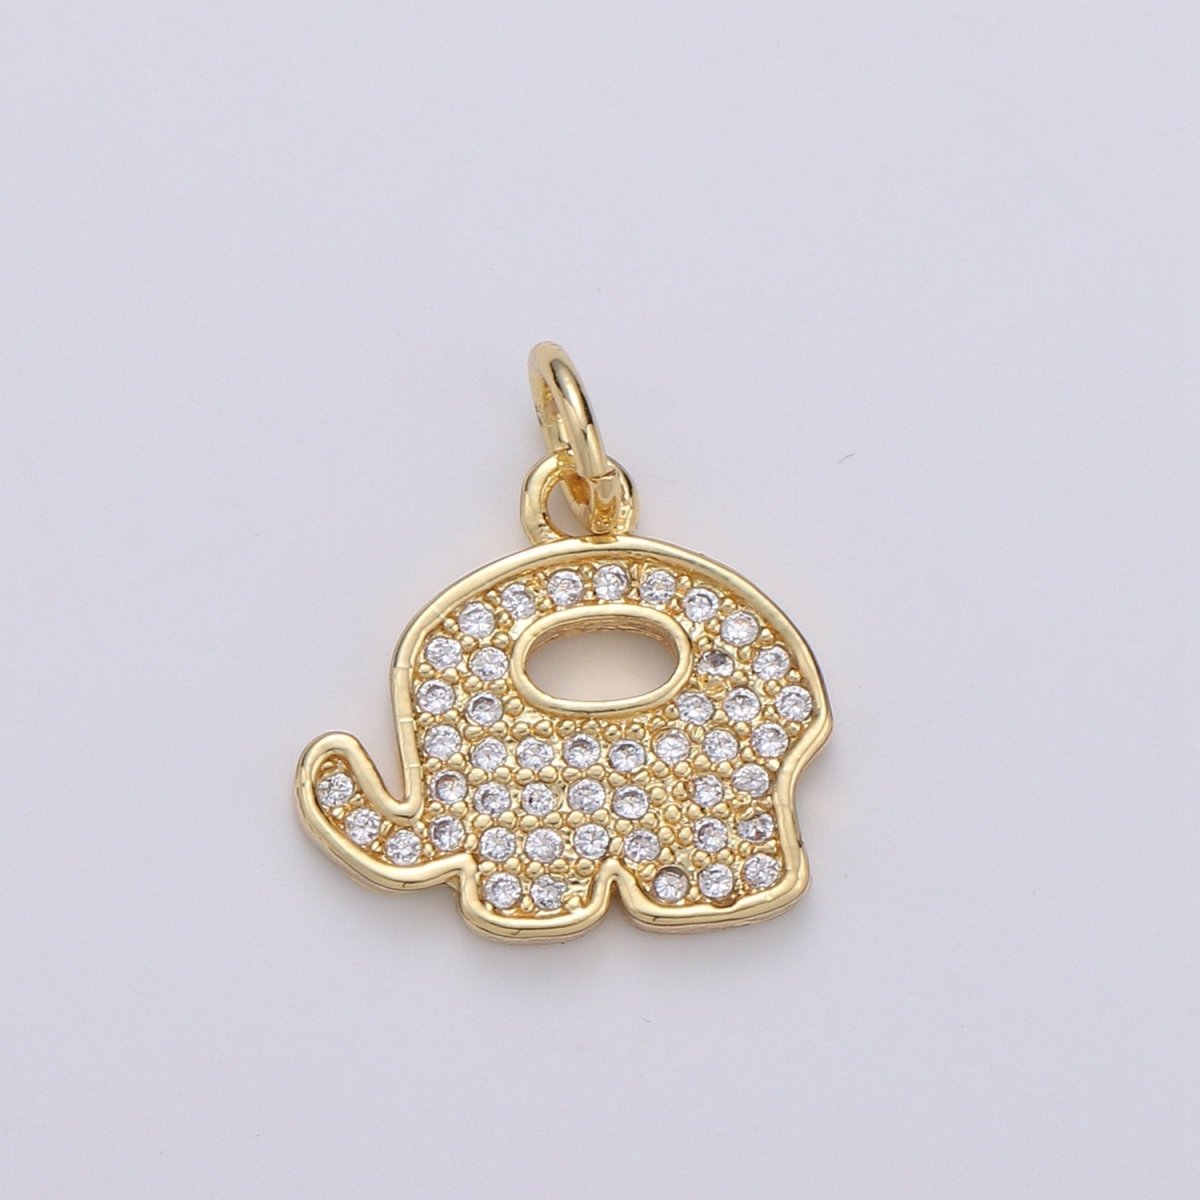 Elephant 14K Gold Filled Charm Good Luck Charms, Micro Pave Deity Charm, Clear CZ Gold Charm, Wisdom Charm Dainty Jewelry Supply D-760 - DLUXCA